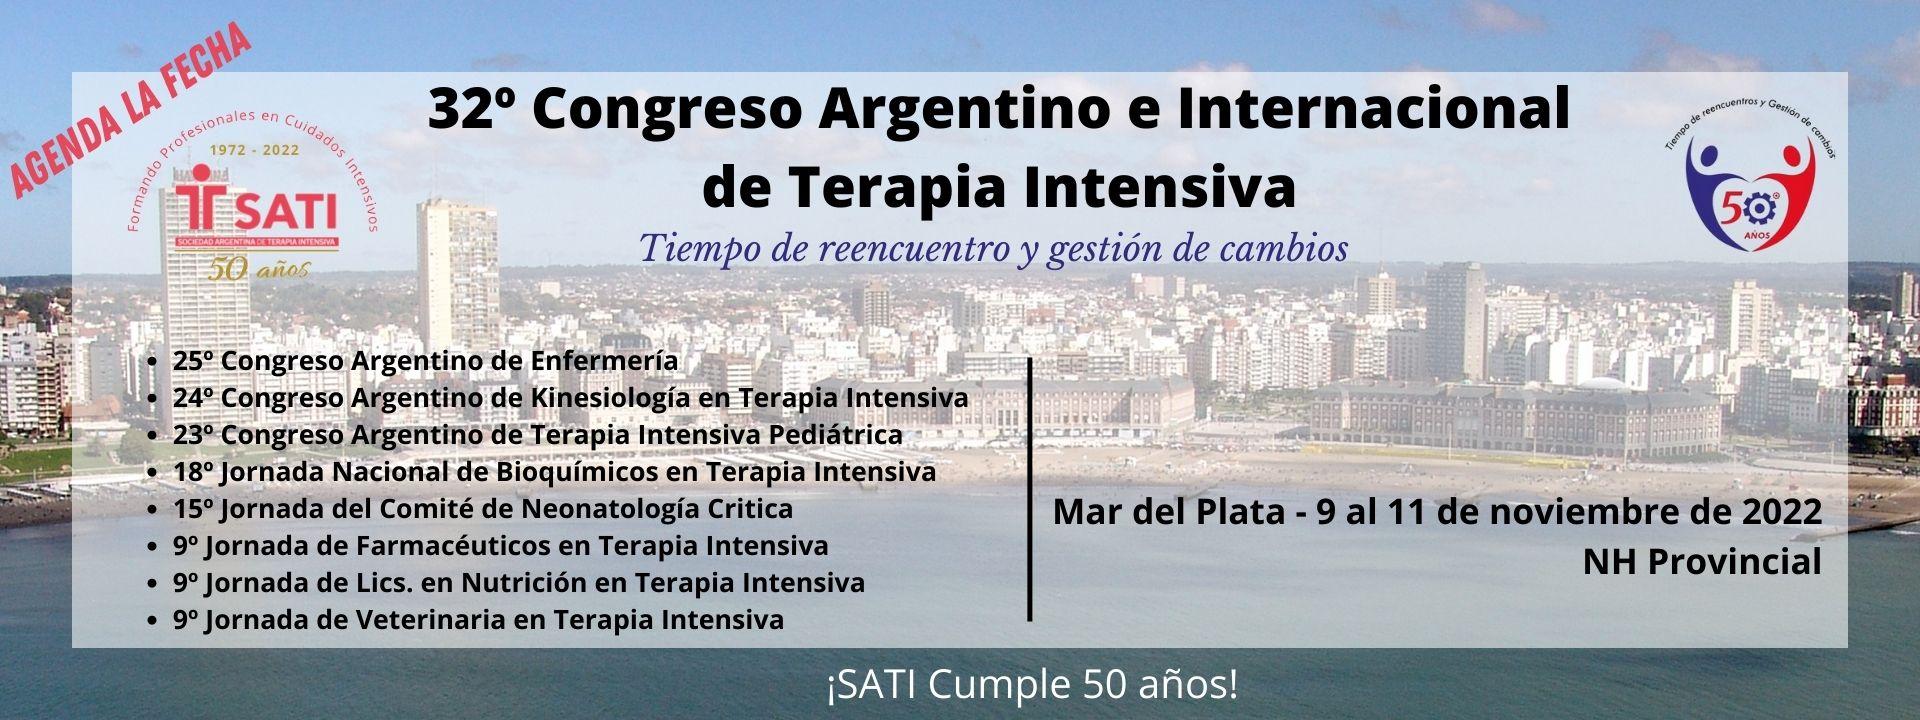 32º Congreso Argentino e Internacional de Terapia Intensiva